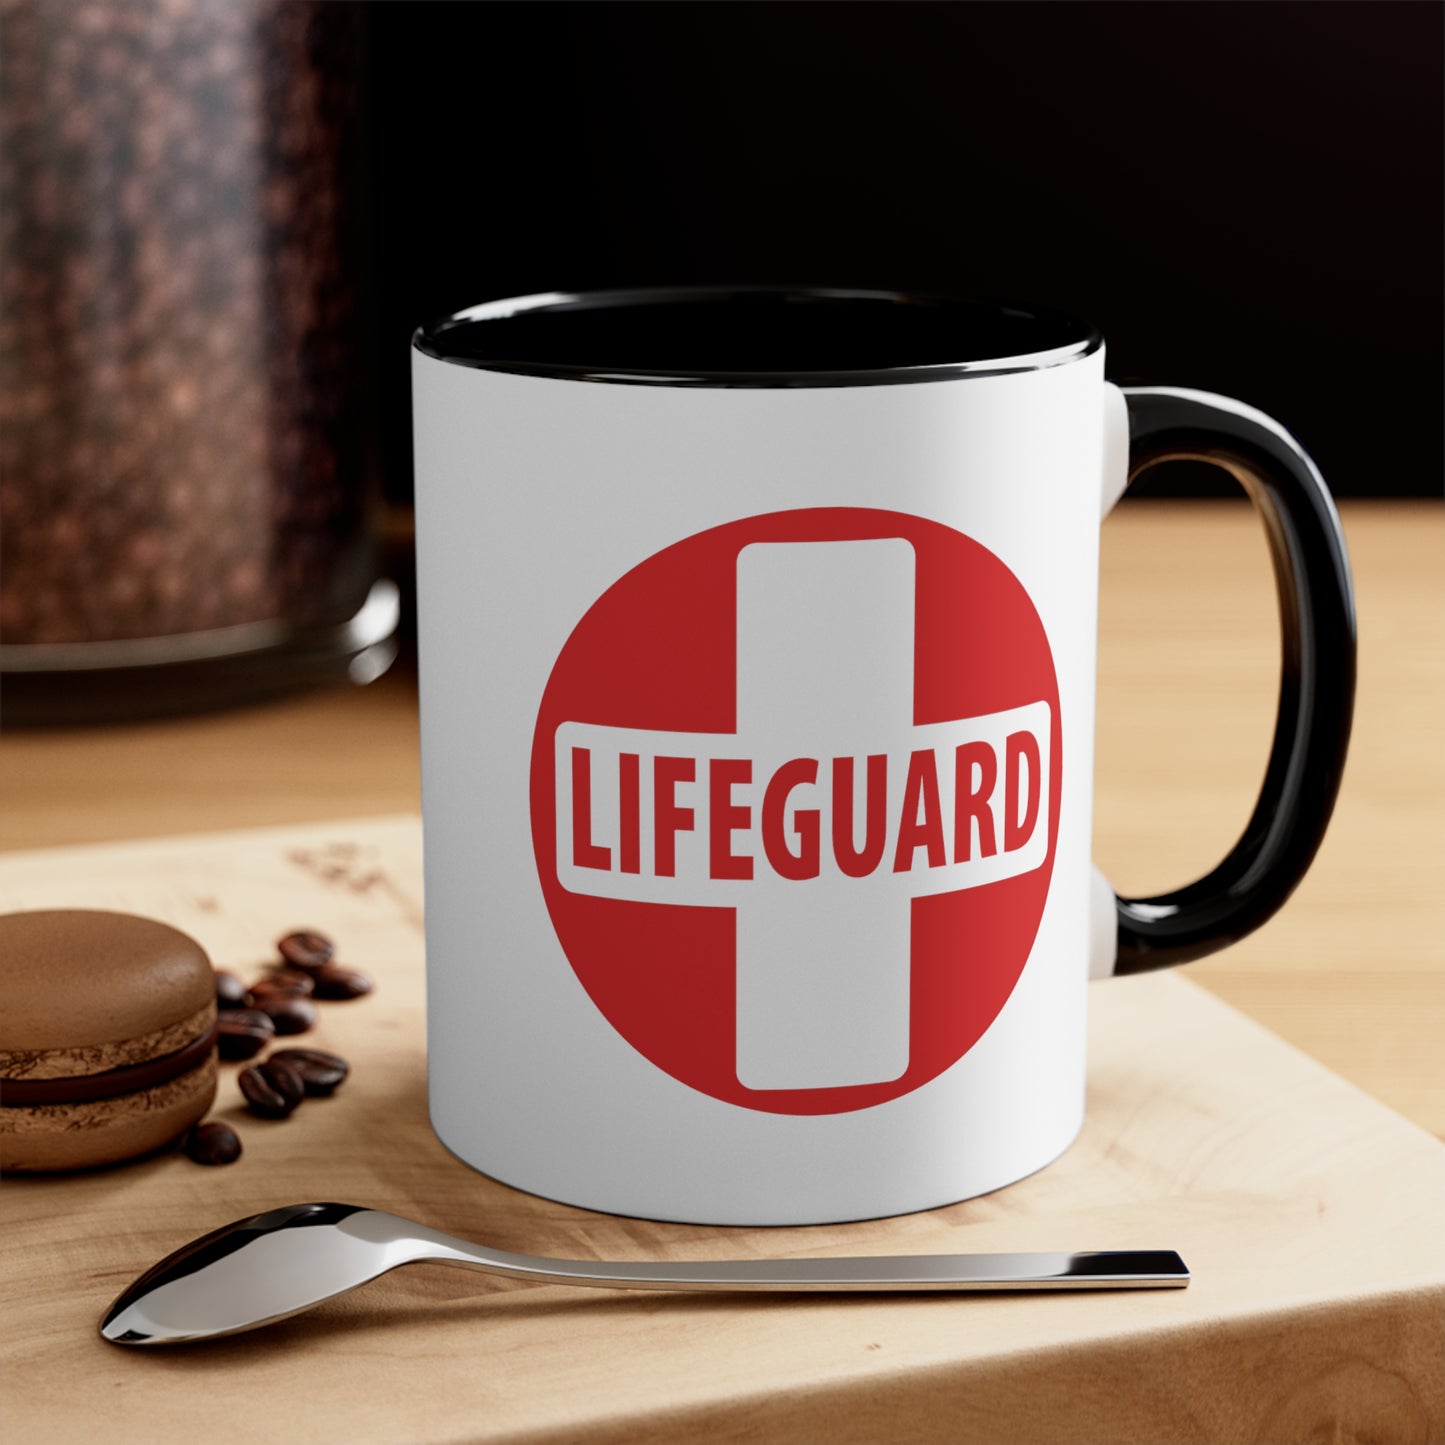 Lifeguard Coffee Mug - Double Sided Black Accent White Ceramic 11oz by TheGlassyLass.com